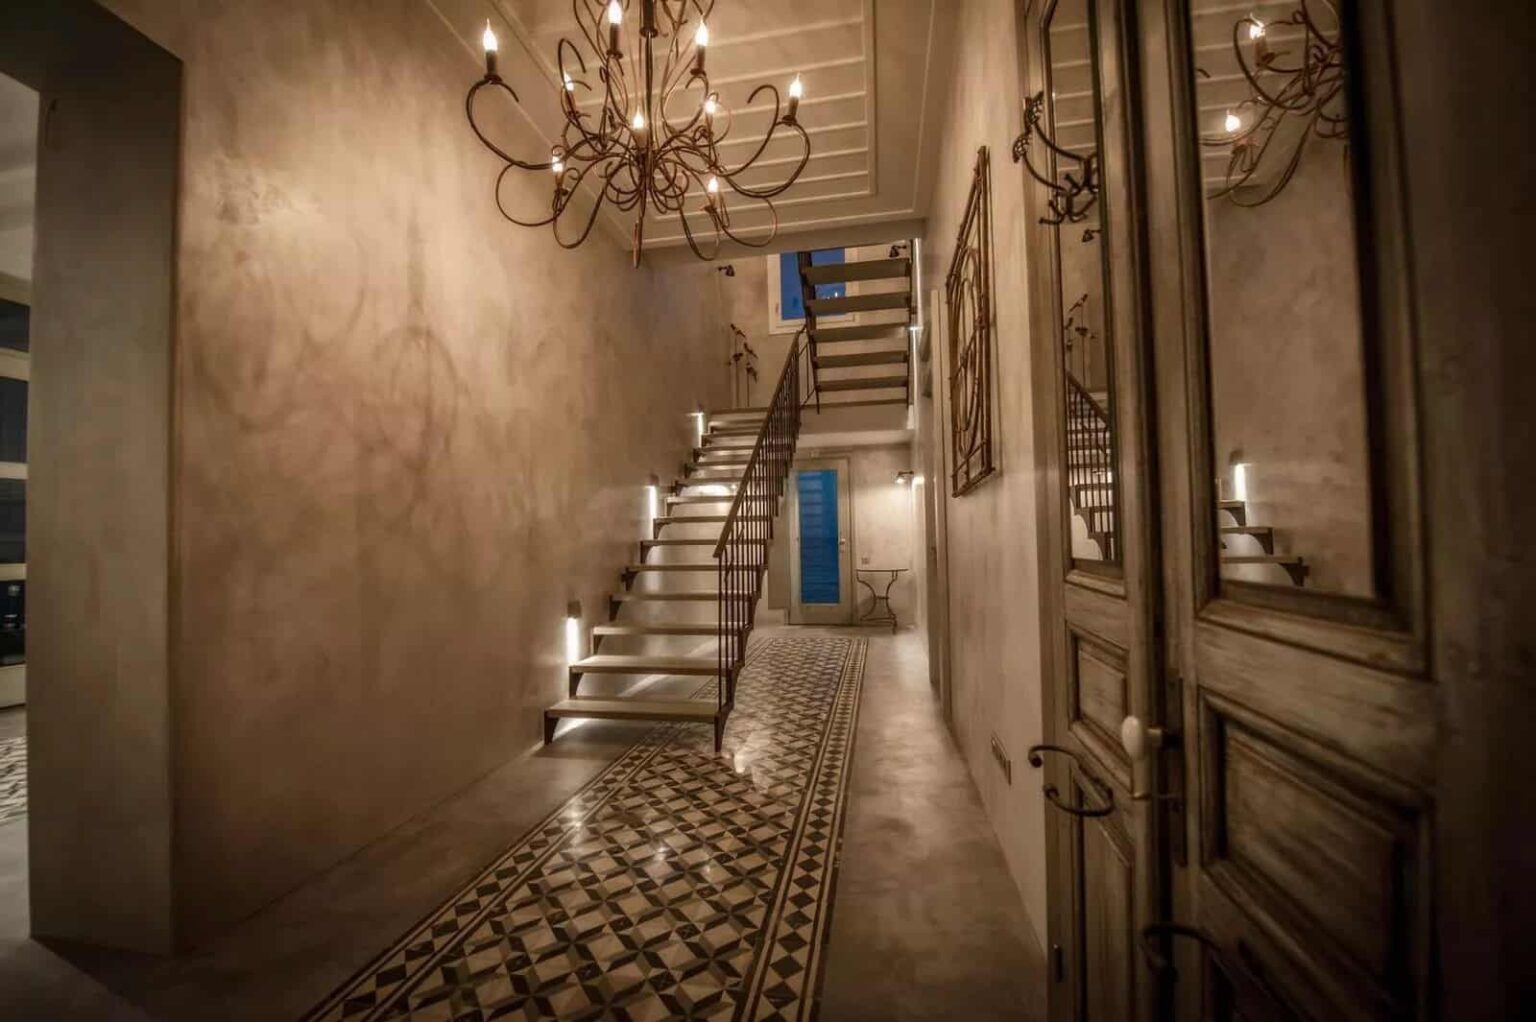 Dexamenes Beachfront Villa luxurious entry foyer with stairs to upper level.